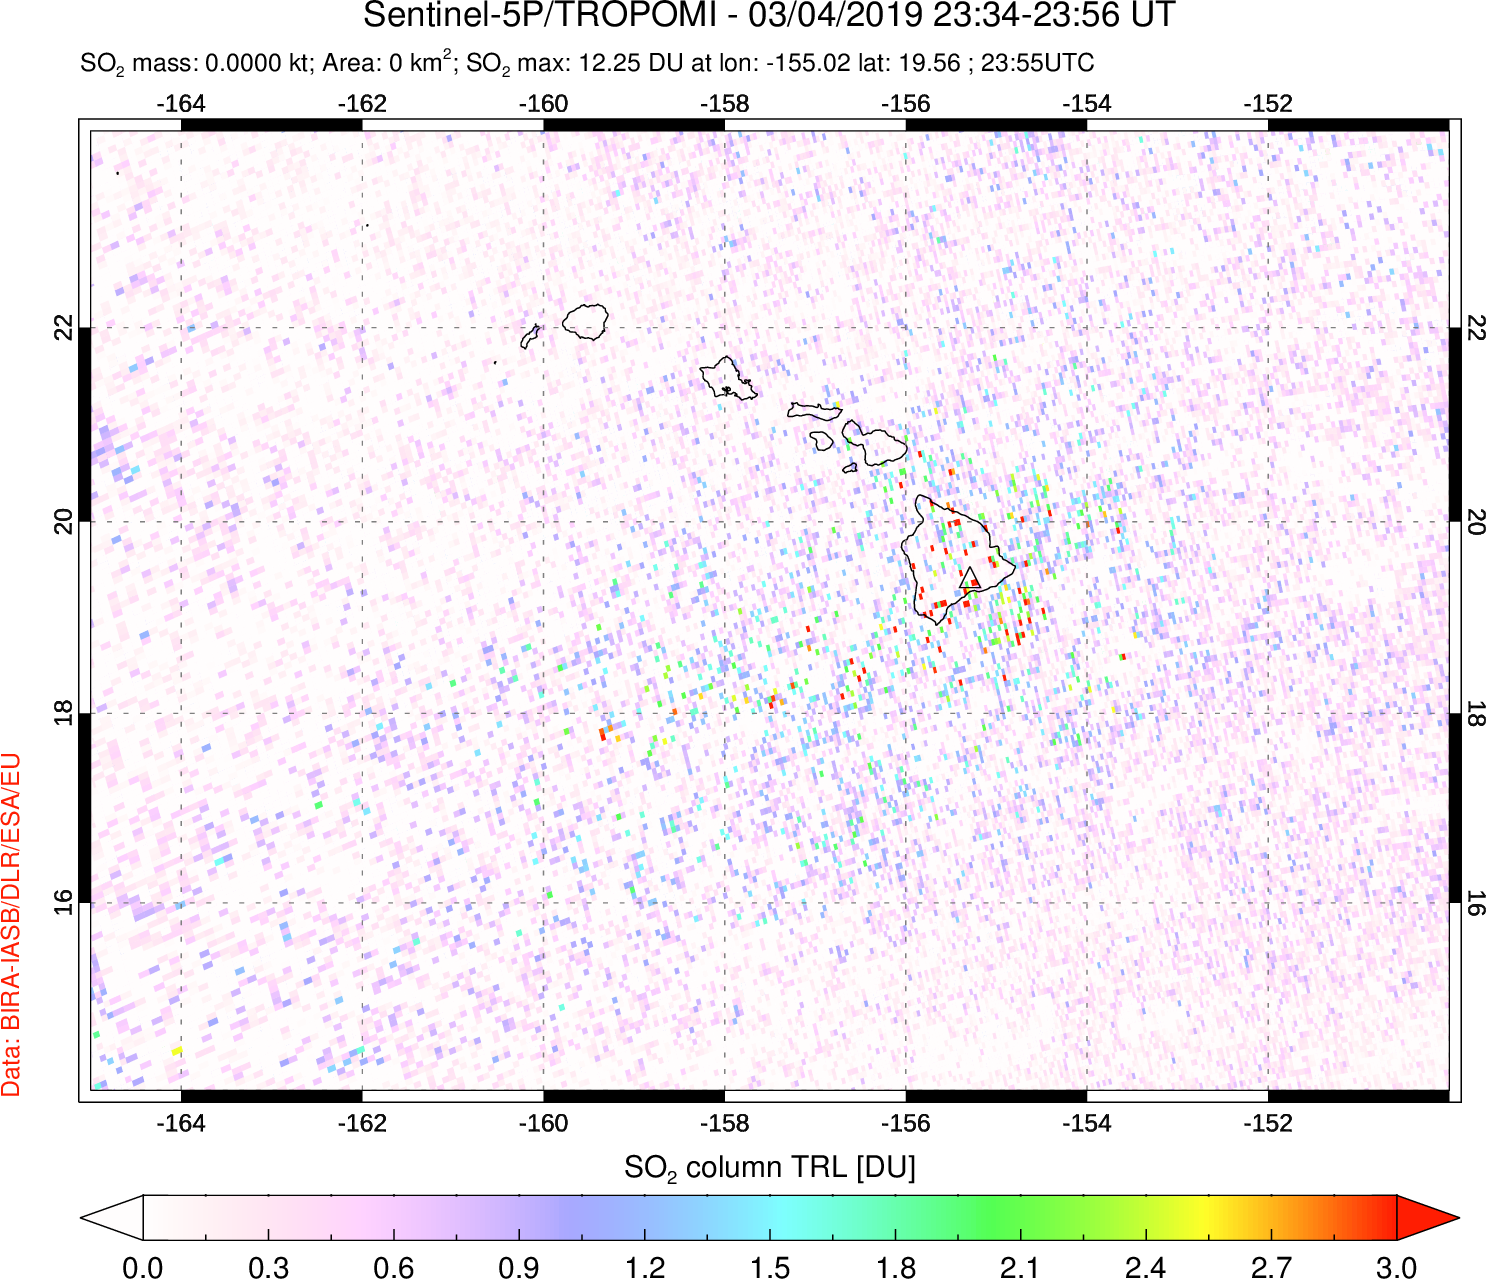 A sulfur dioxide image over Hawaii, USA on Mar 04, 2019.